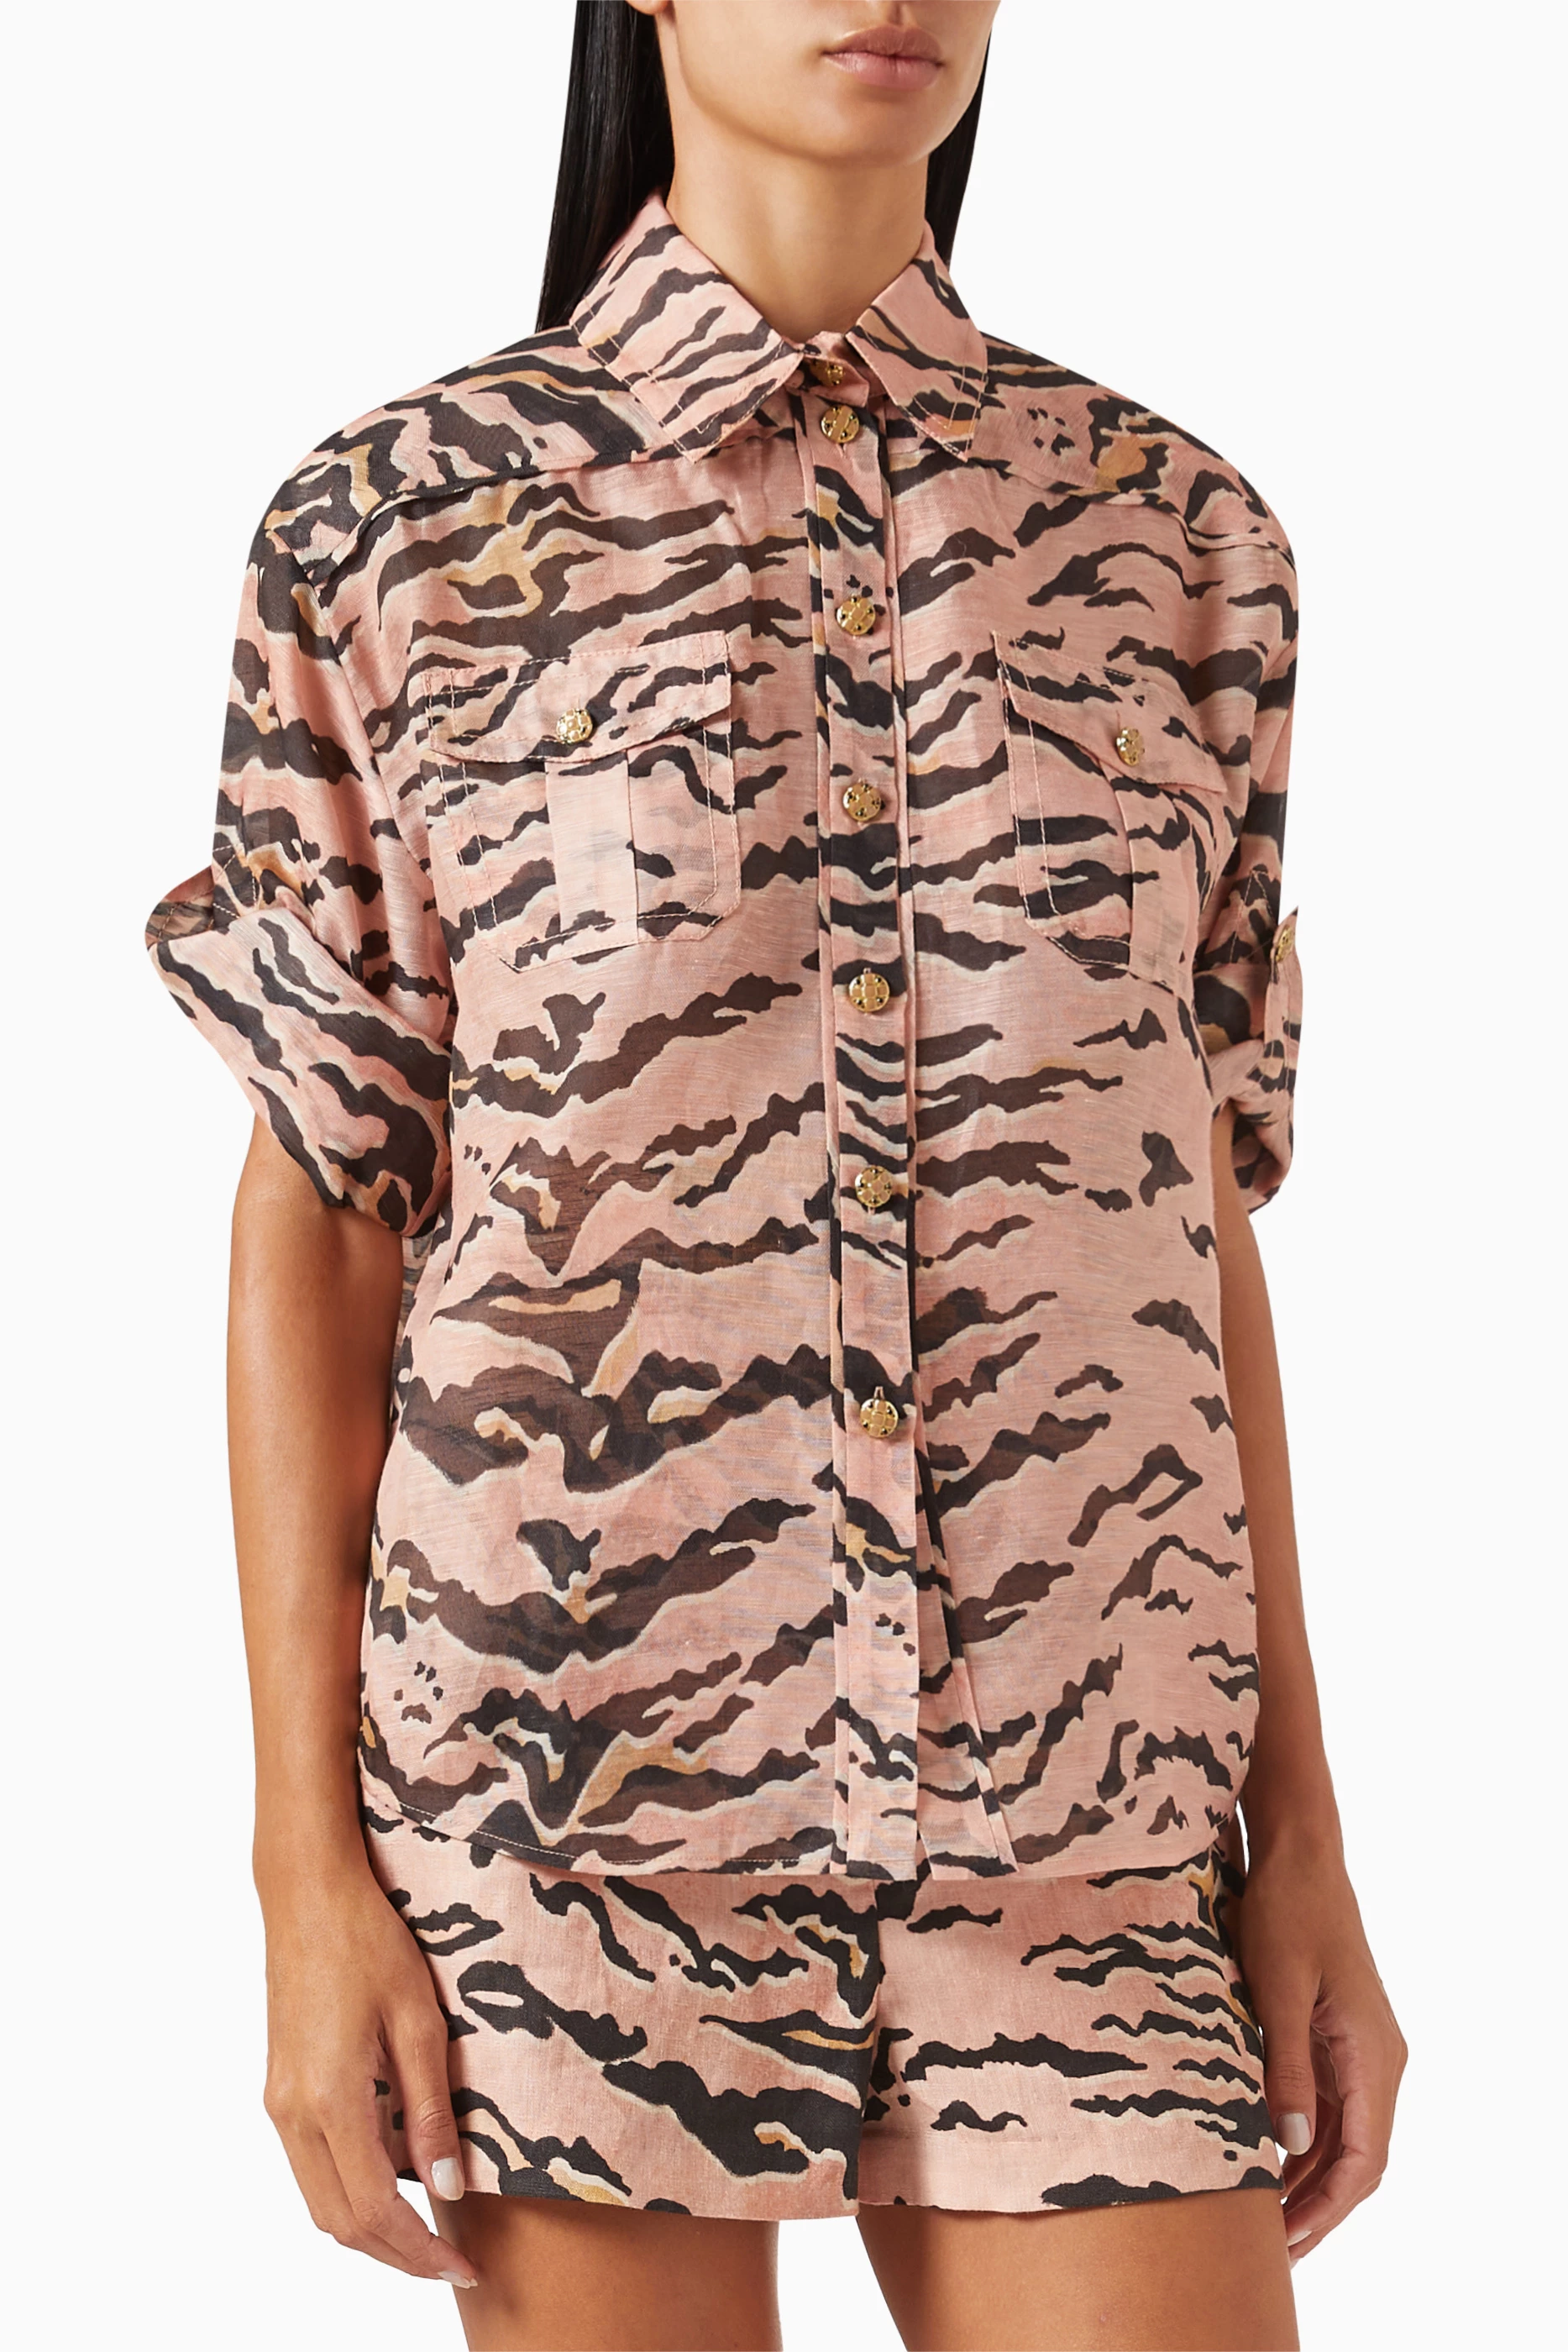 Zimmermann Matchmaker Safari Shirt, Pink Tiger, Size 2